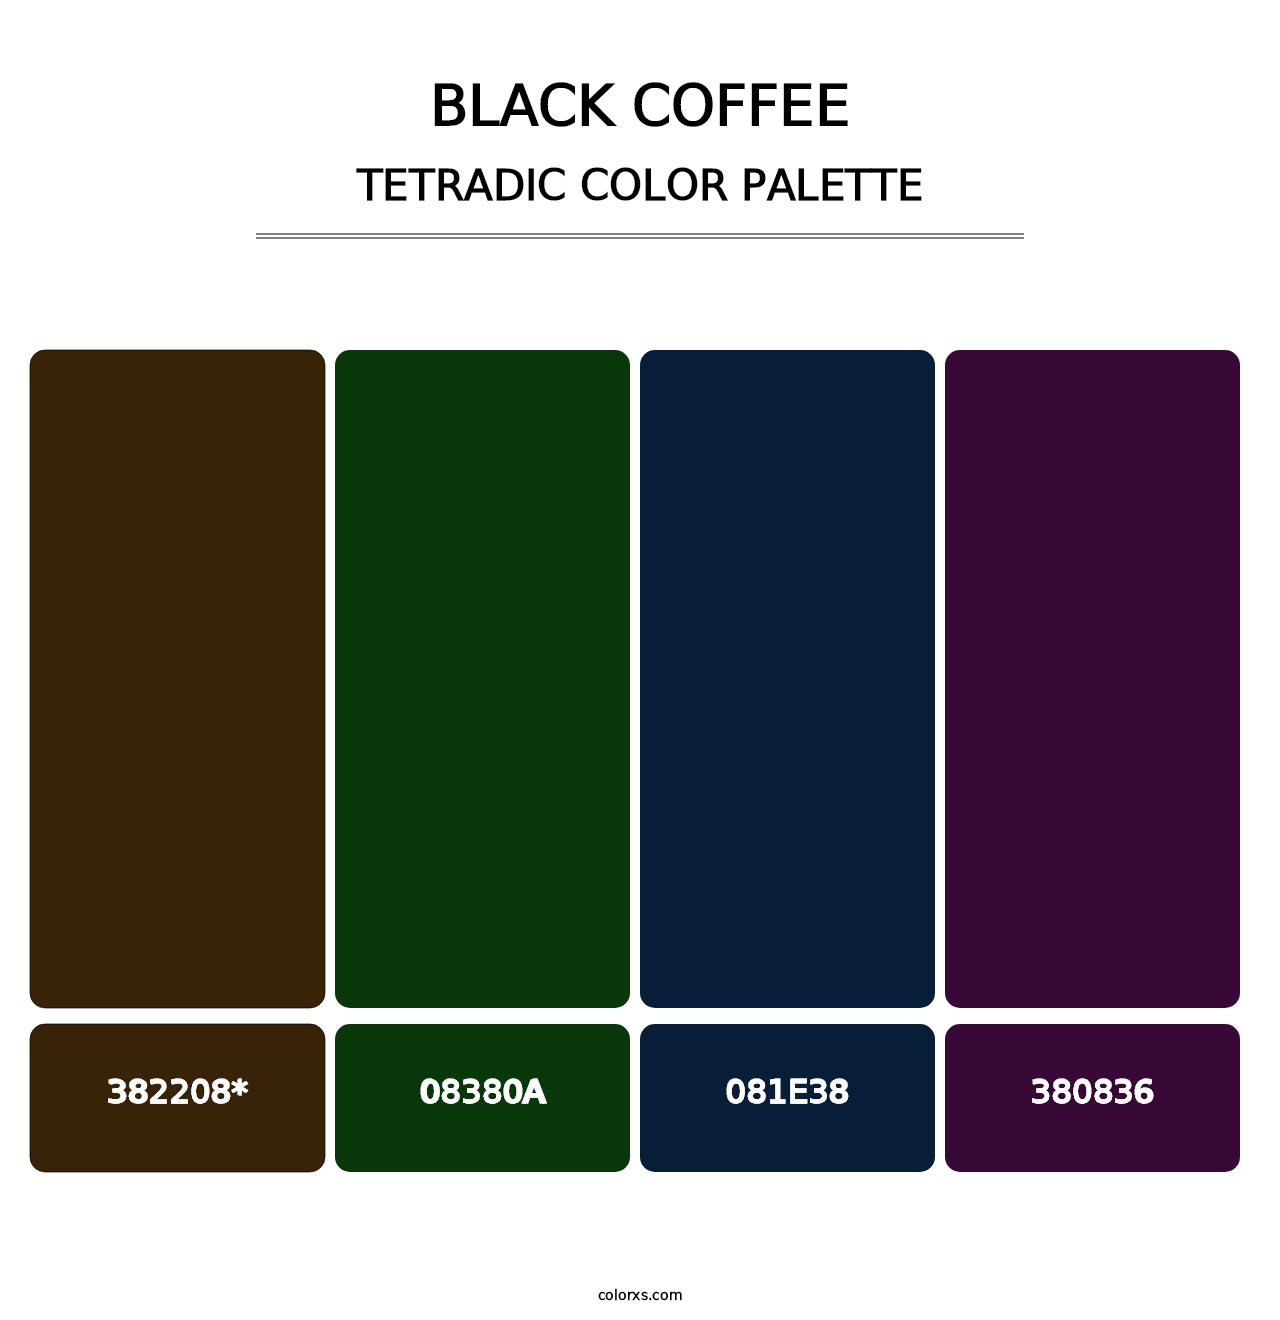 Black Coffee - Tetradic Color Palette